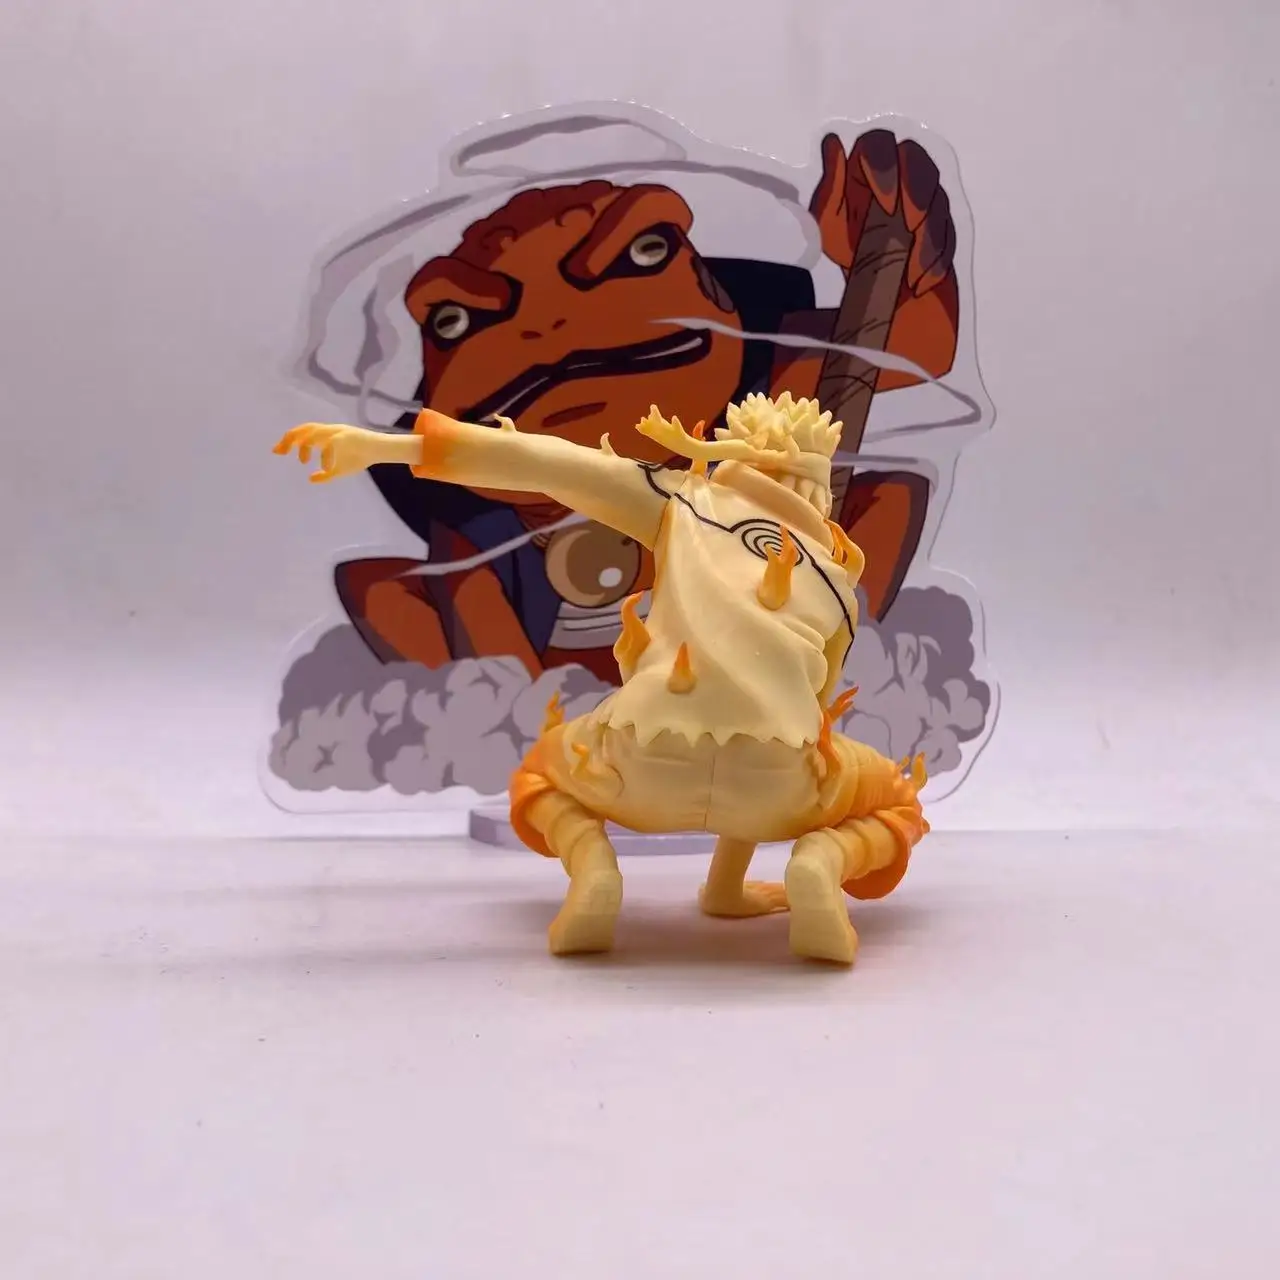 Panel Asli Tontonan Naruto Action Figure Model Mainan Anime Figuralscar Konsol Tengah Ornamen Mainan Stand Kartu Kodok - 4